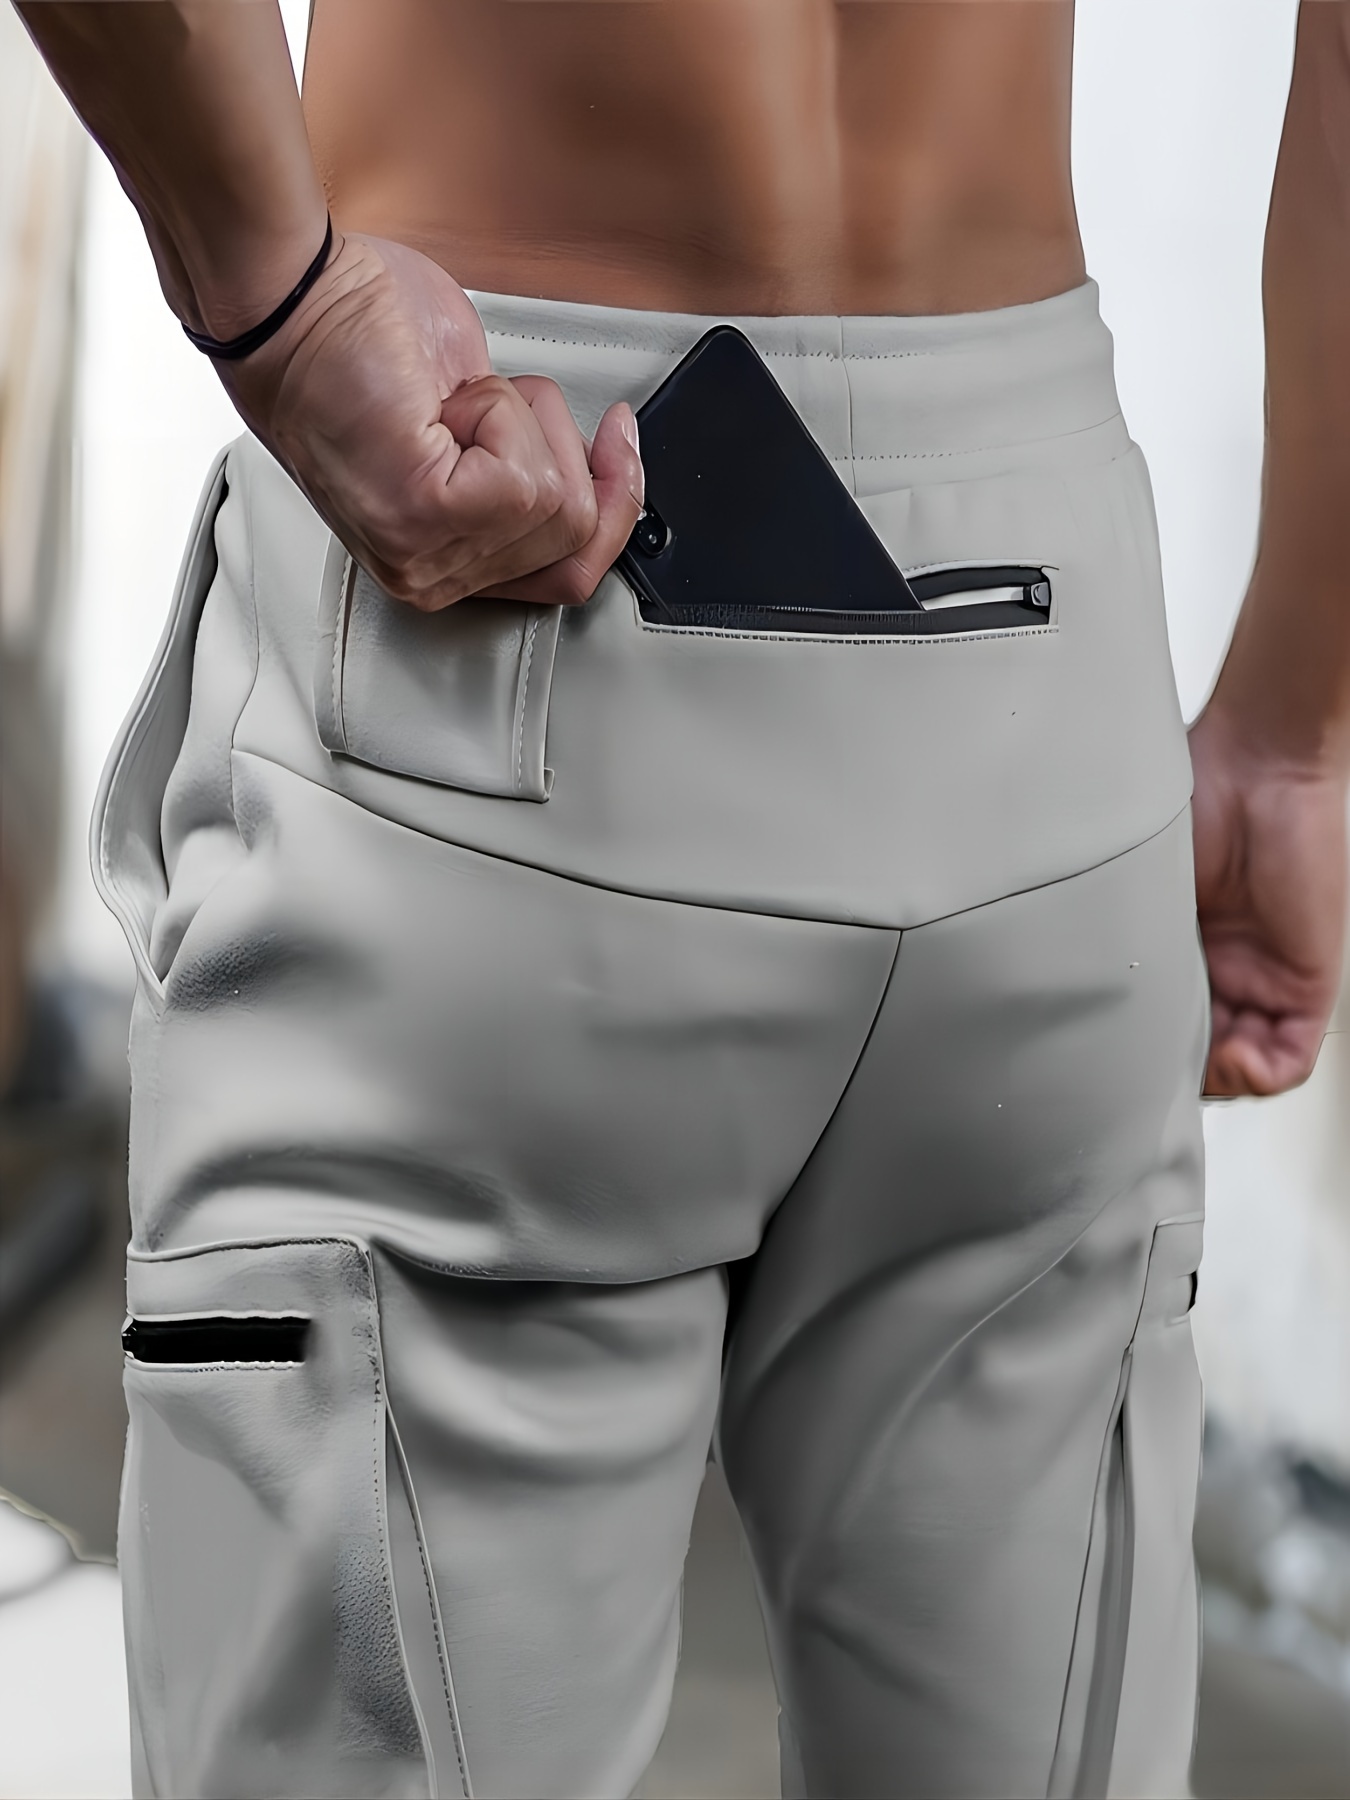 Men Sport Cotton Slim Straight Trousers Long Multi-pocket zip-up jogging  pants - Toleemart